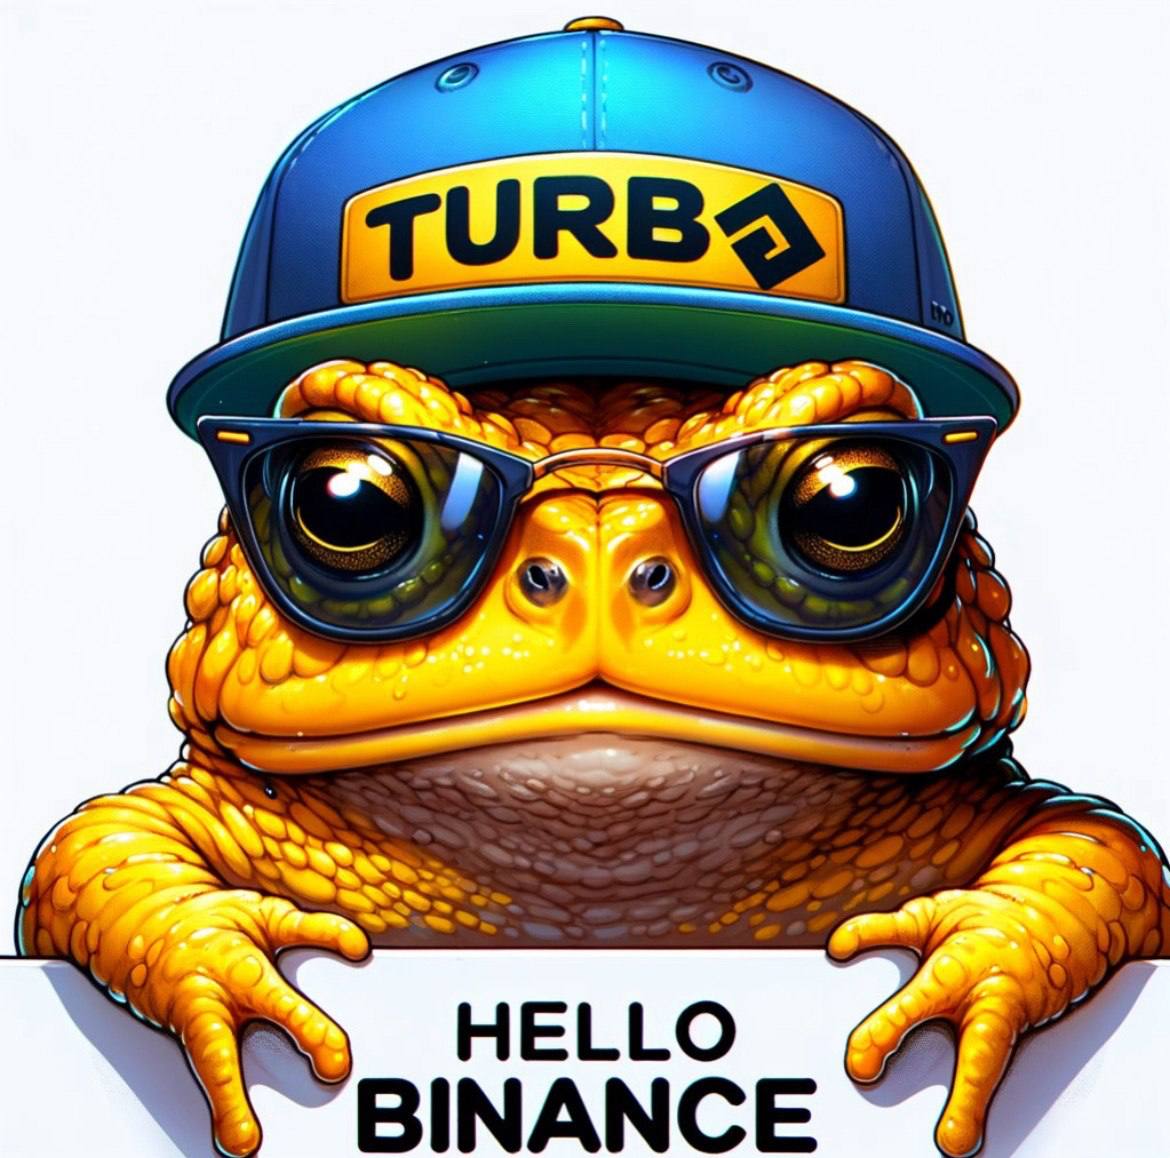 $Turbo to #Binance let's go.